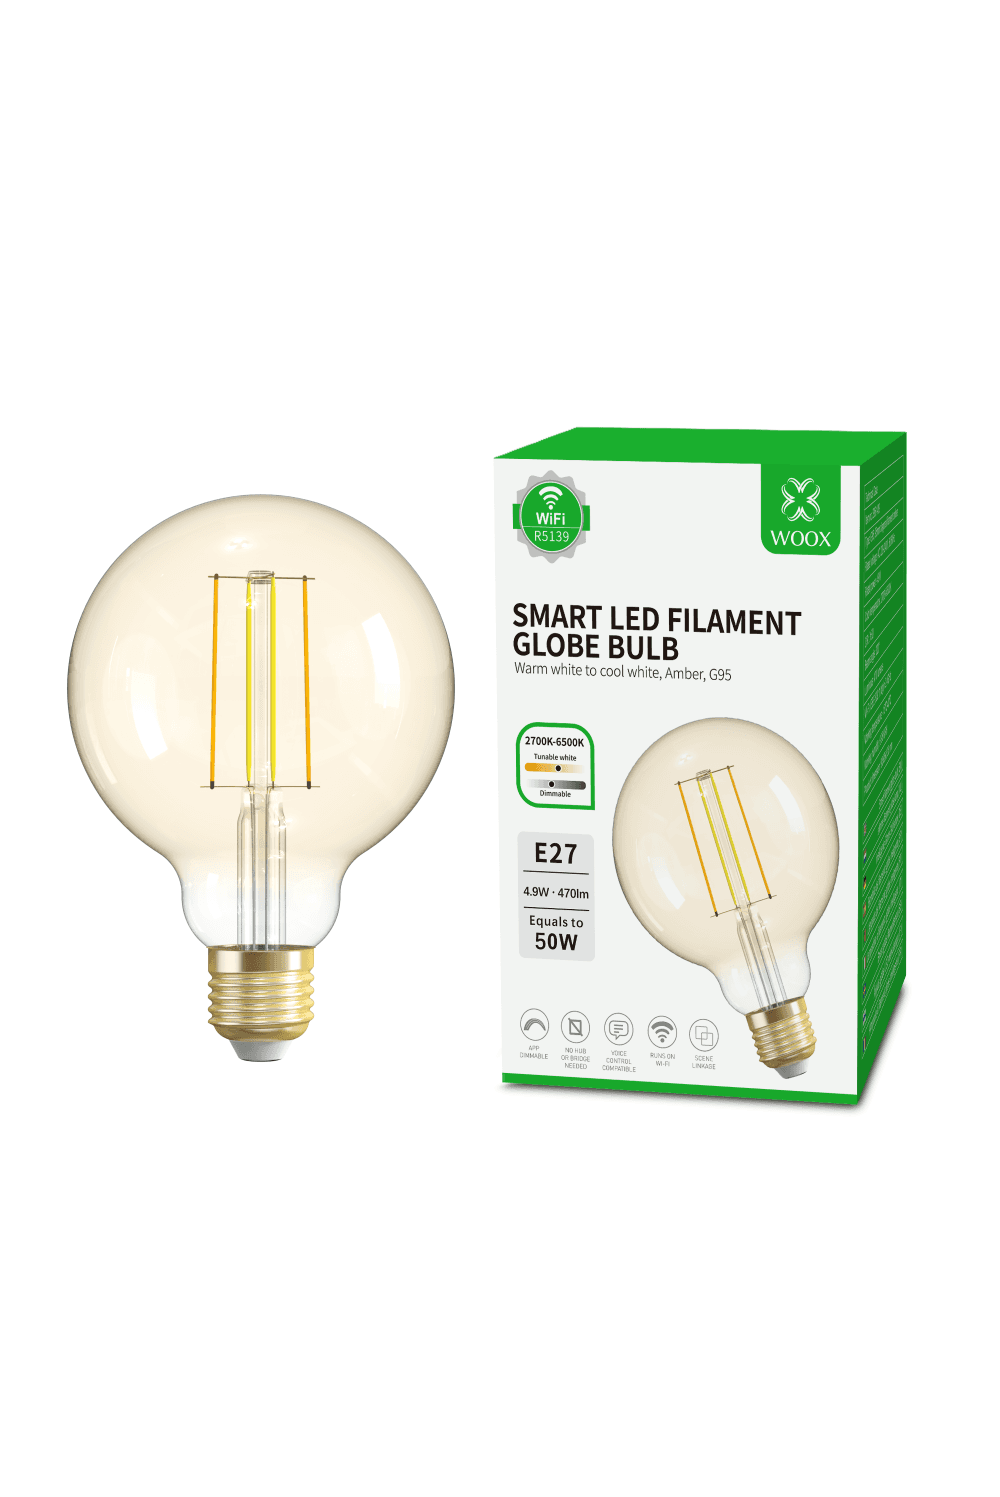 Aanbieding Slimme verlichting. Woox R5139 Slimme filament E27 lamp